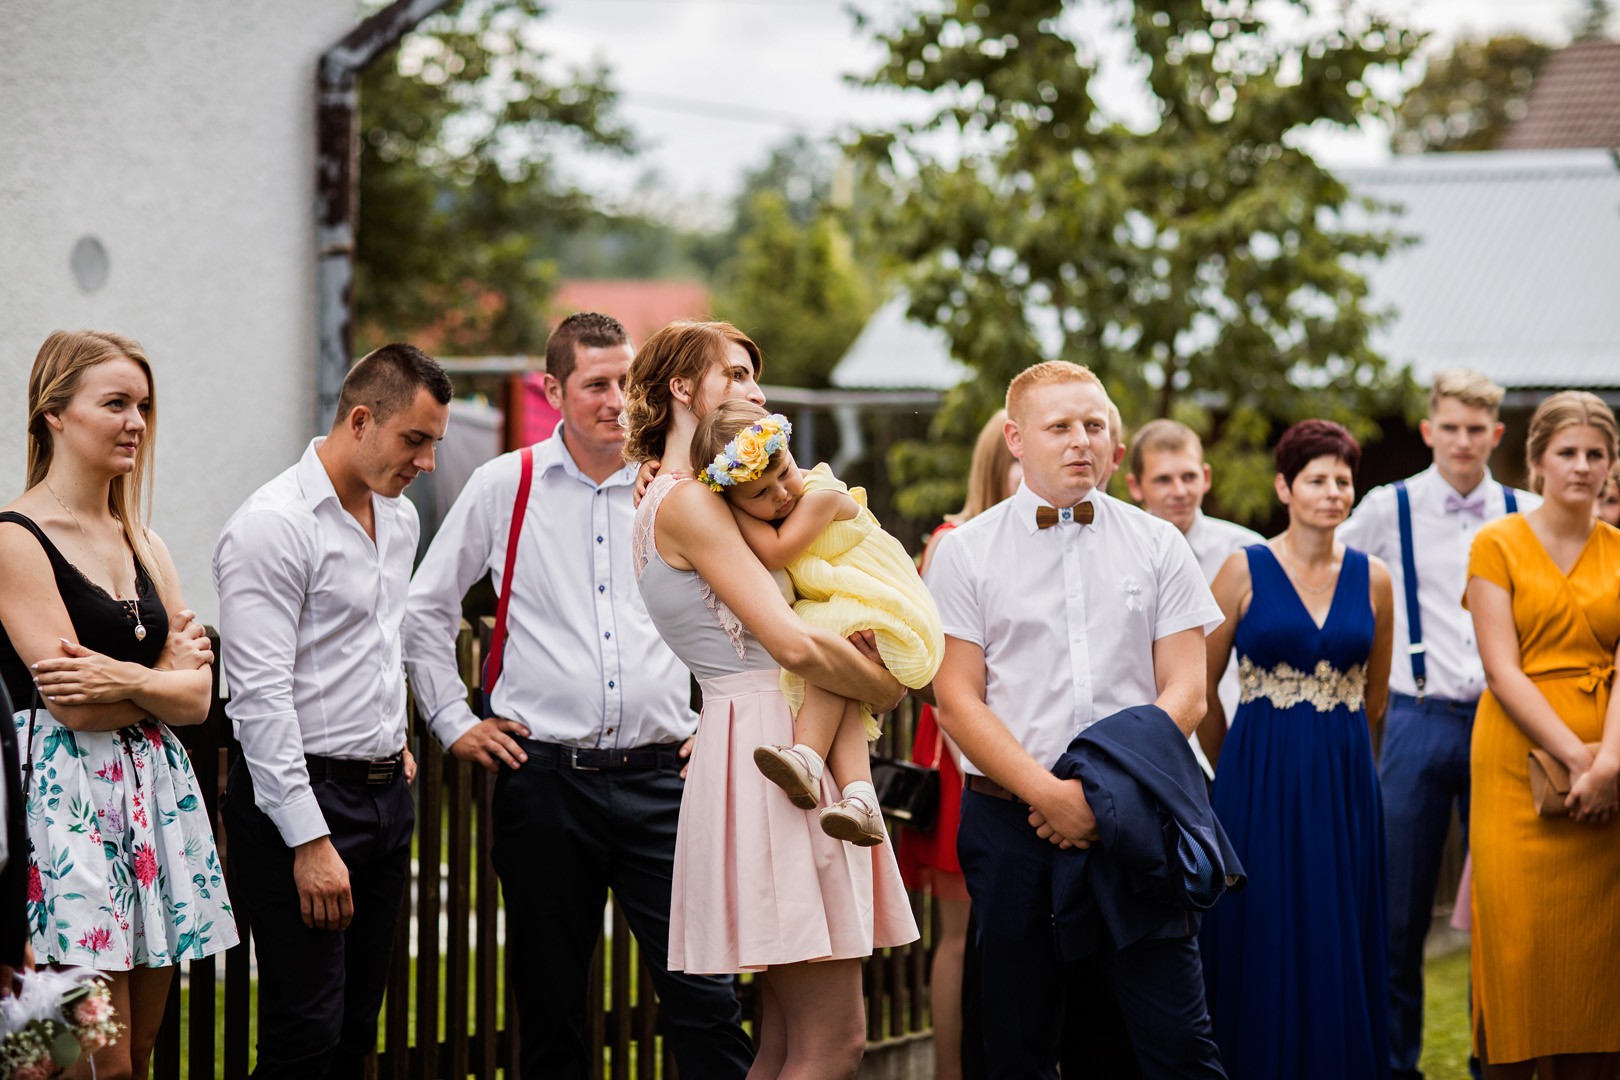 Wedding photos from the wedding day of Miška and Stanka. - 0179.jpg